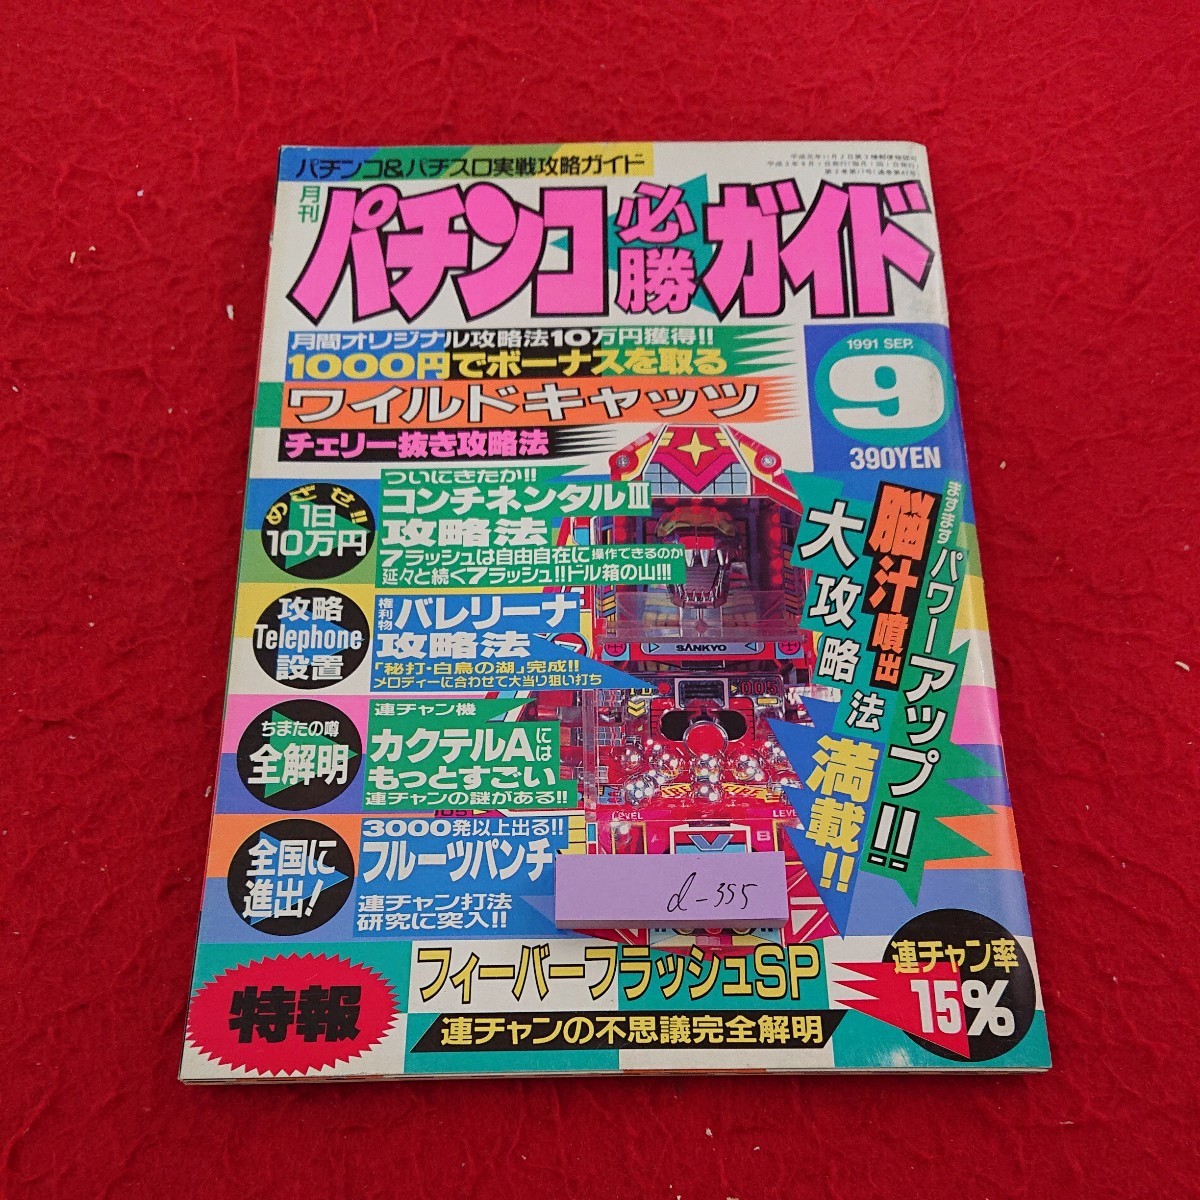 d-355 патинко обязательно . гид 1991 год выпуск 9 месяц номер Byakuya-Shobo глаз следующий неизвестен wild Cat's tsu Continental Ⅱ и т.п. *9